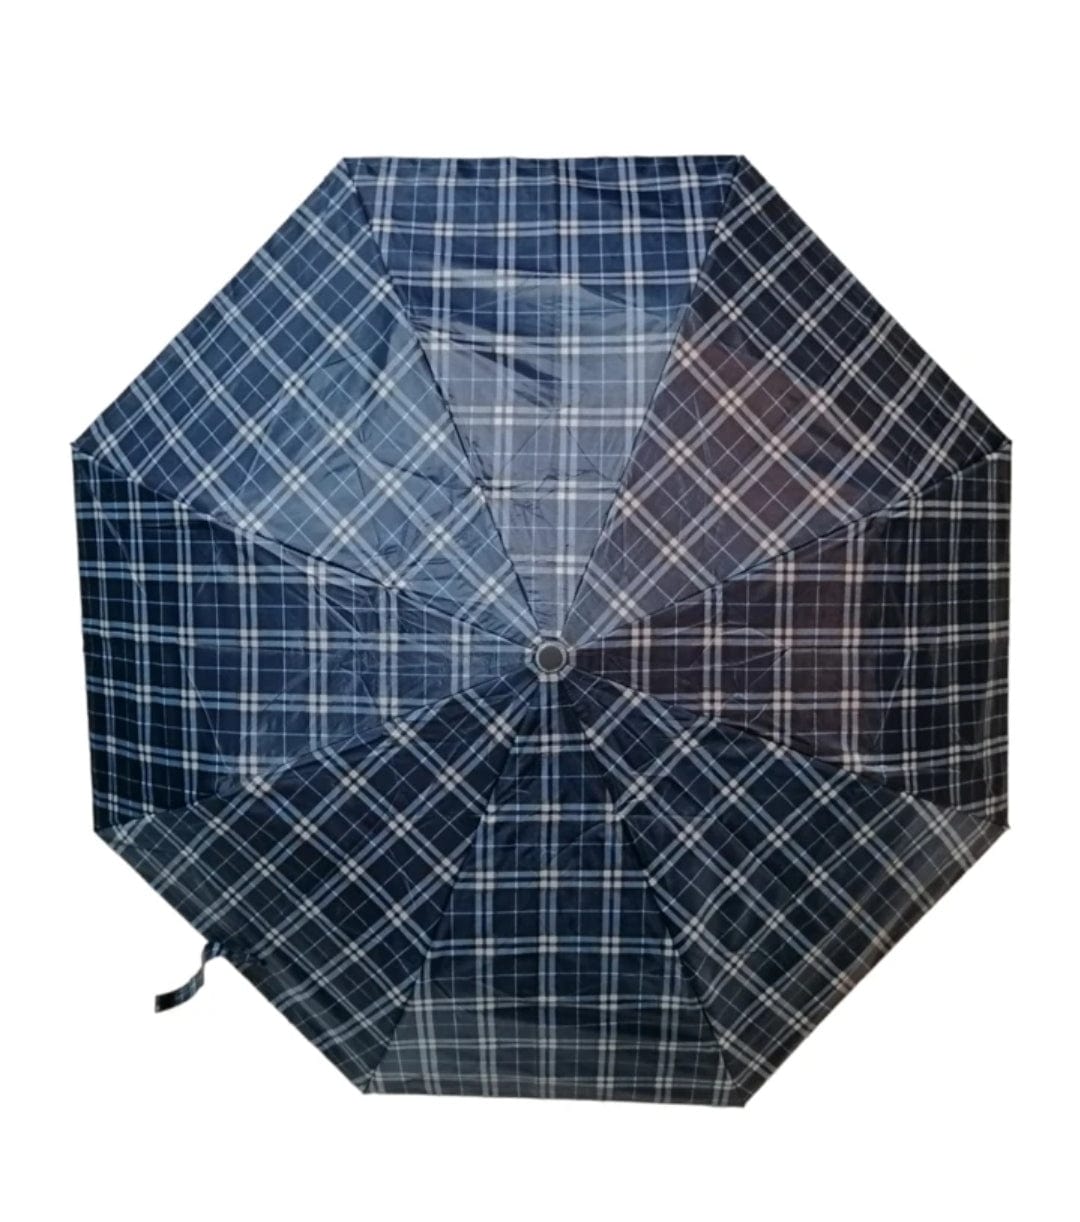 250 RS Per pc ON BUYING 🏷IN BULK (30+ qty) decor umbrella LAMANSH® (40 INCH DIA) Check Design Rain Proof & Sun Protective Umbrella | Idol for Corporate Gifting 🎁 & School events